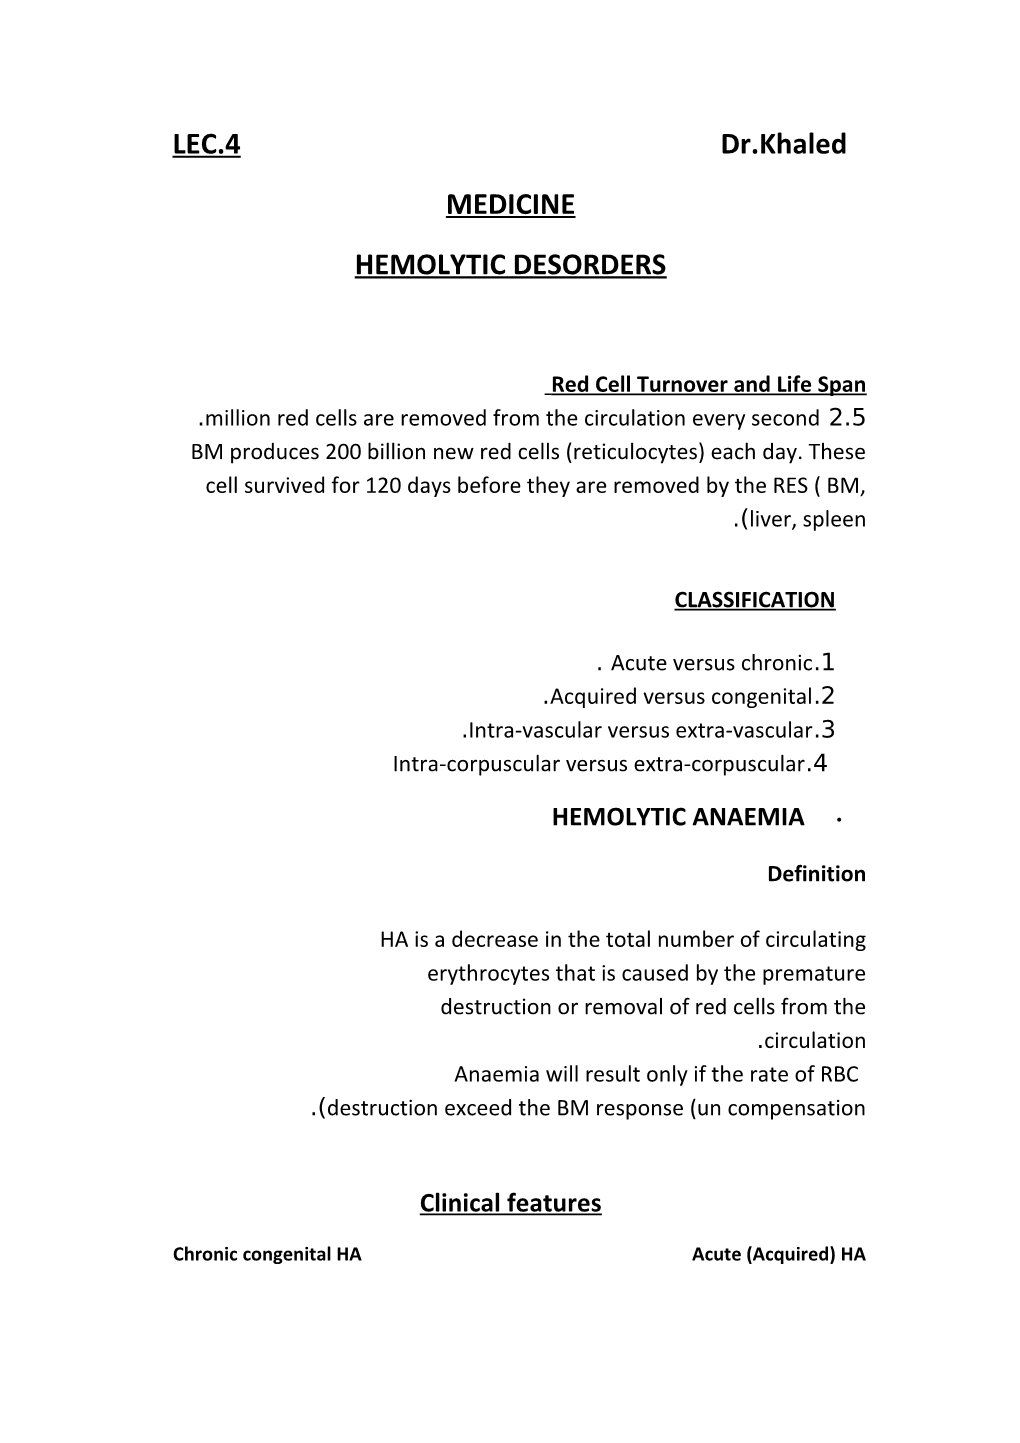 Hemolytic Desorders